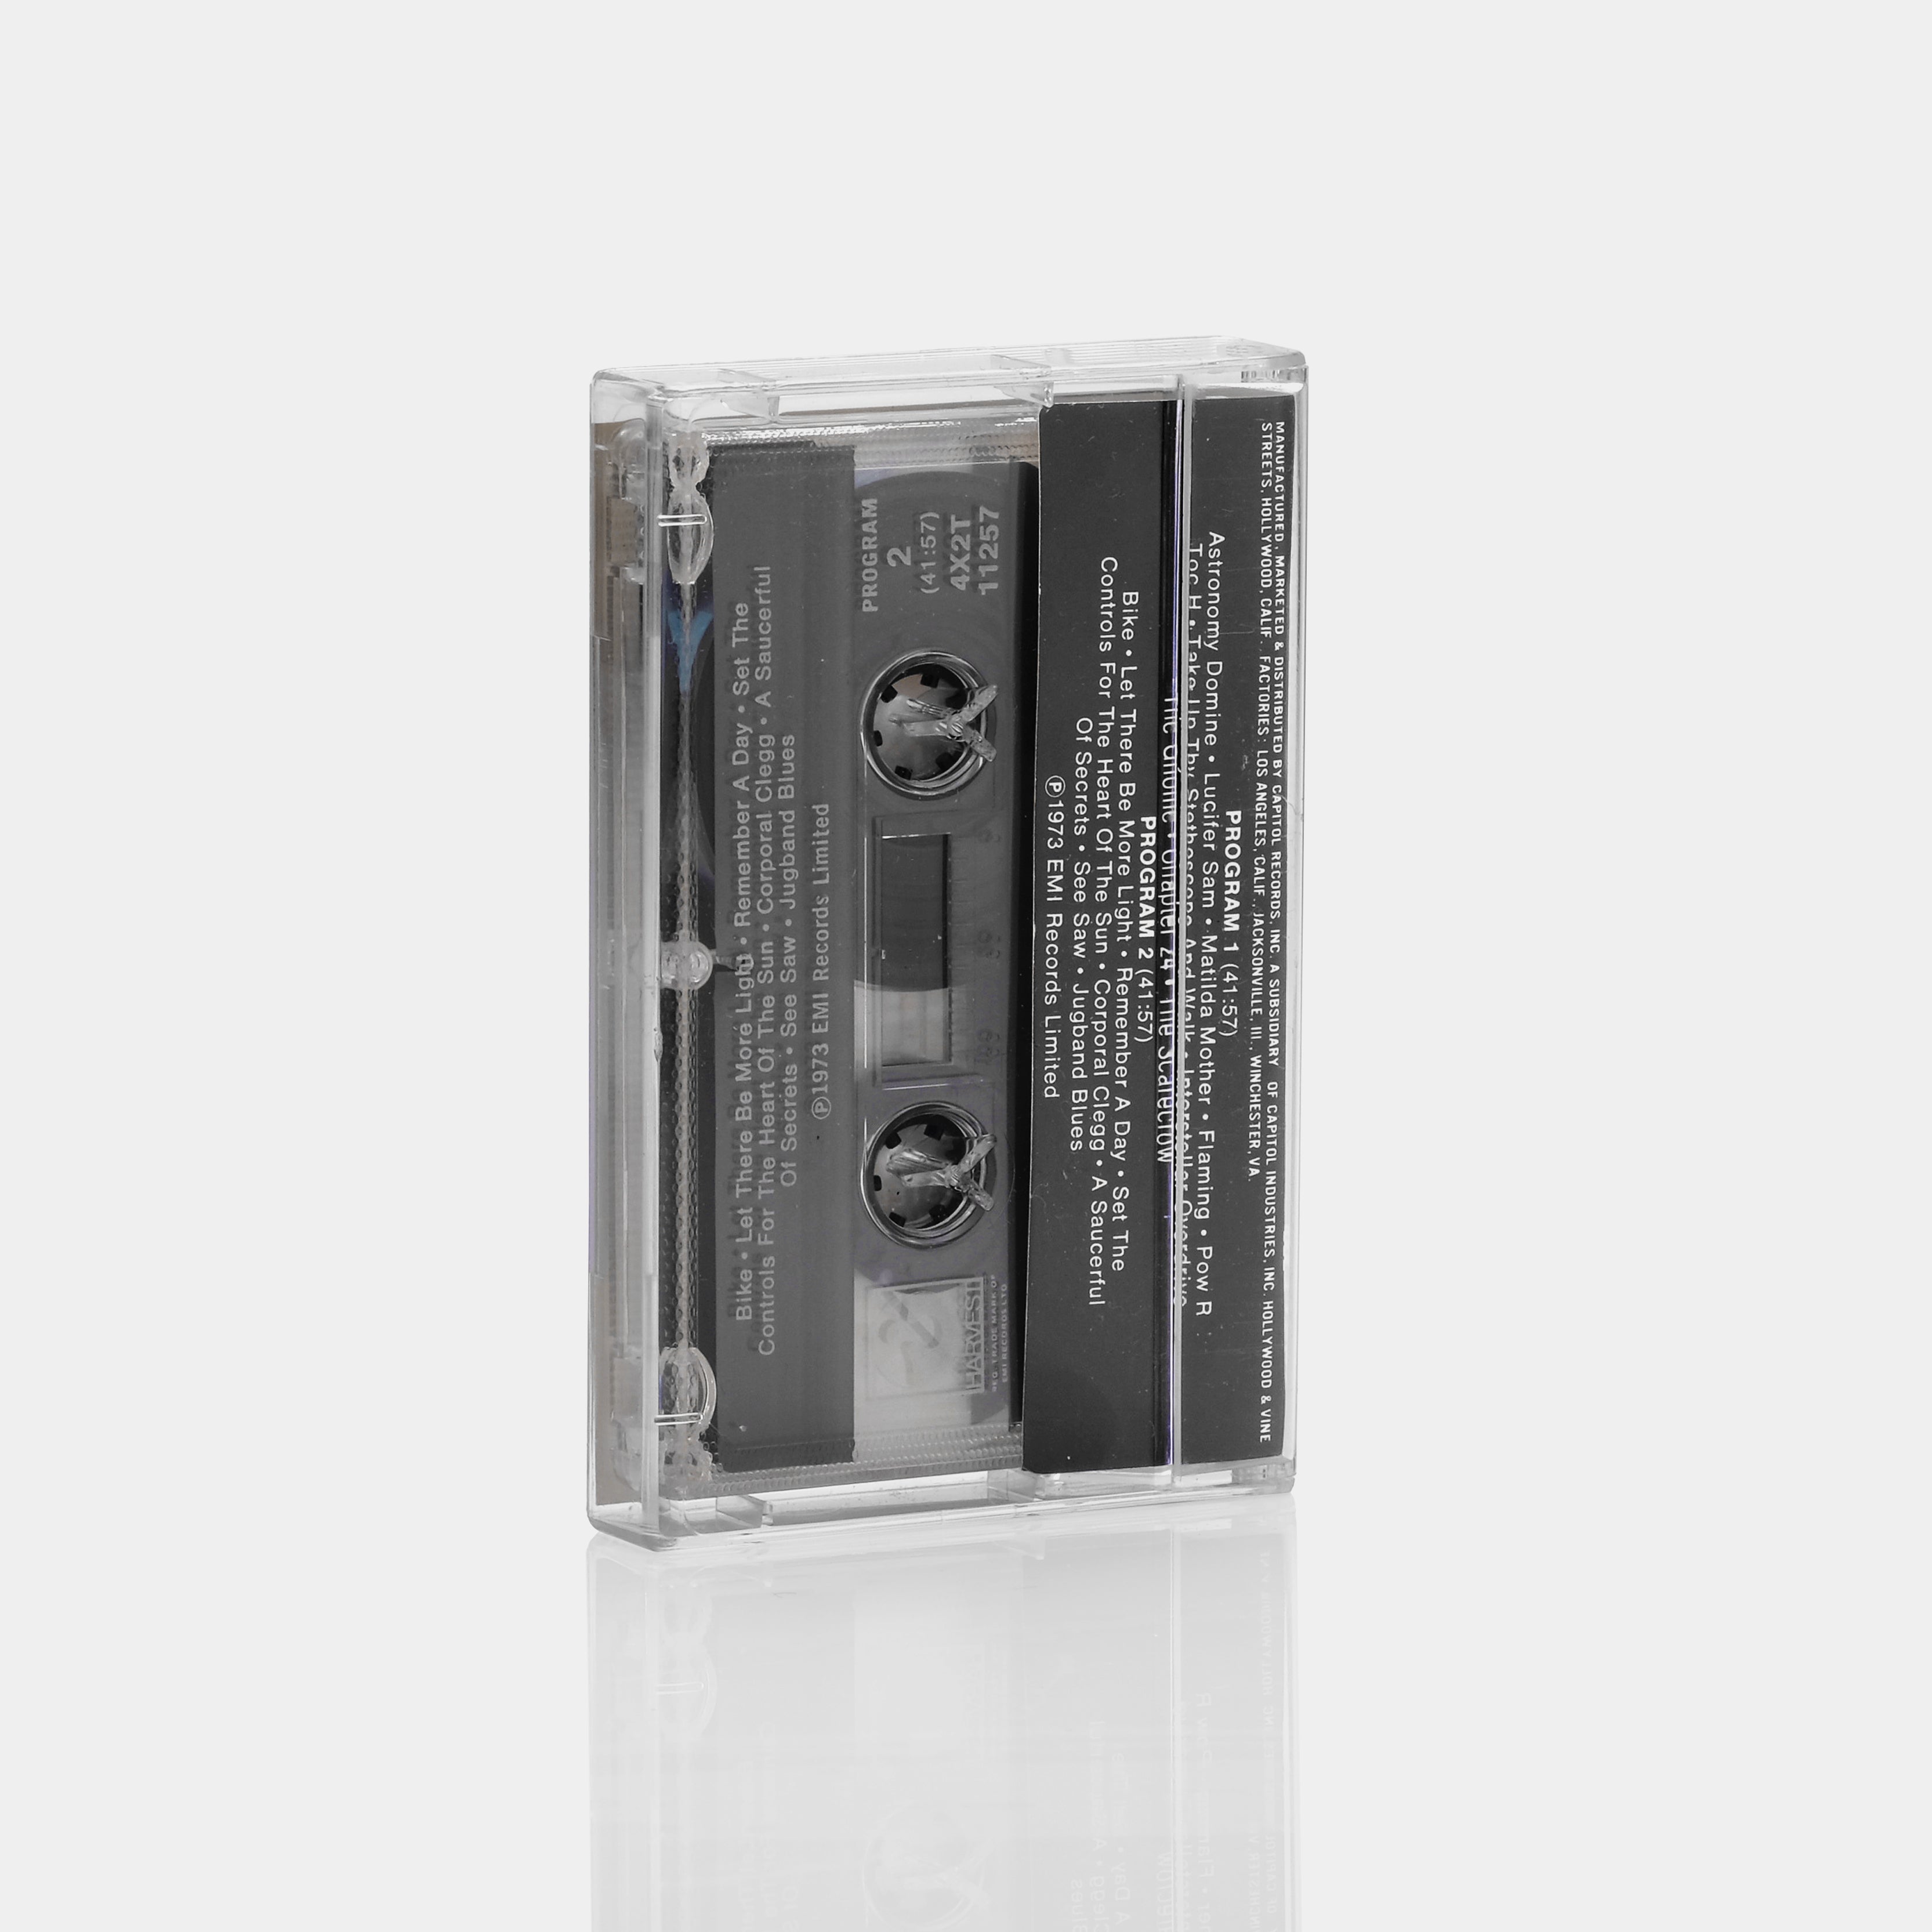 Pink Floyd - A Nice Pair Cassette Tape